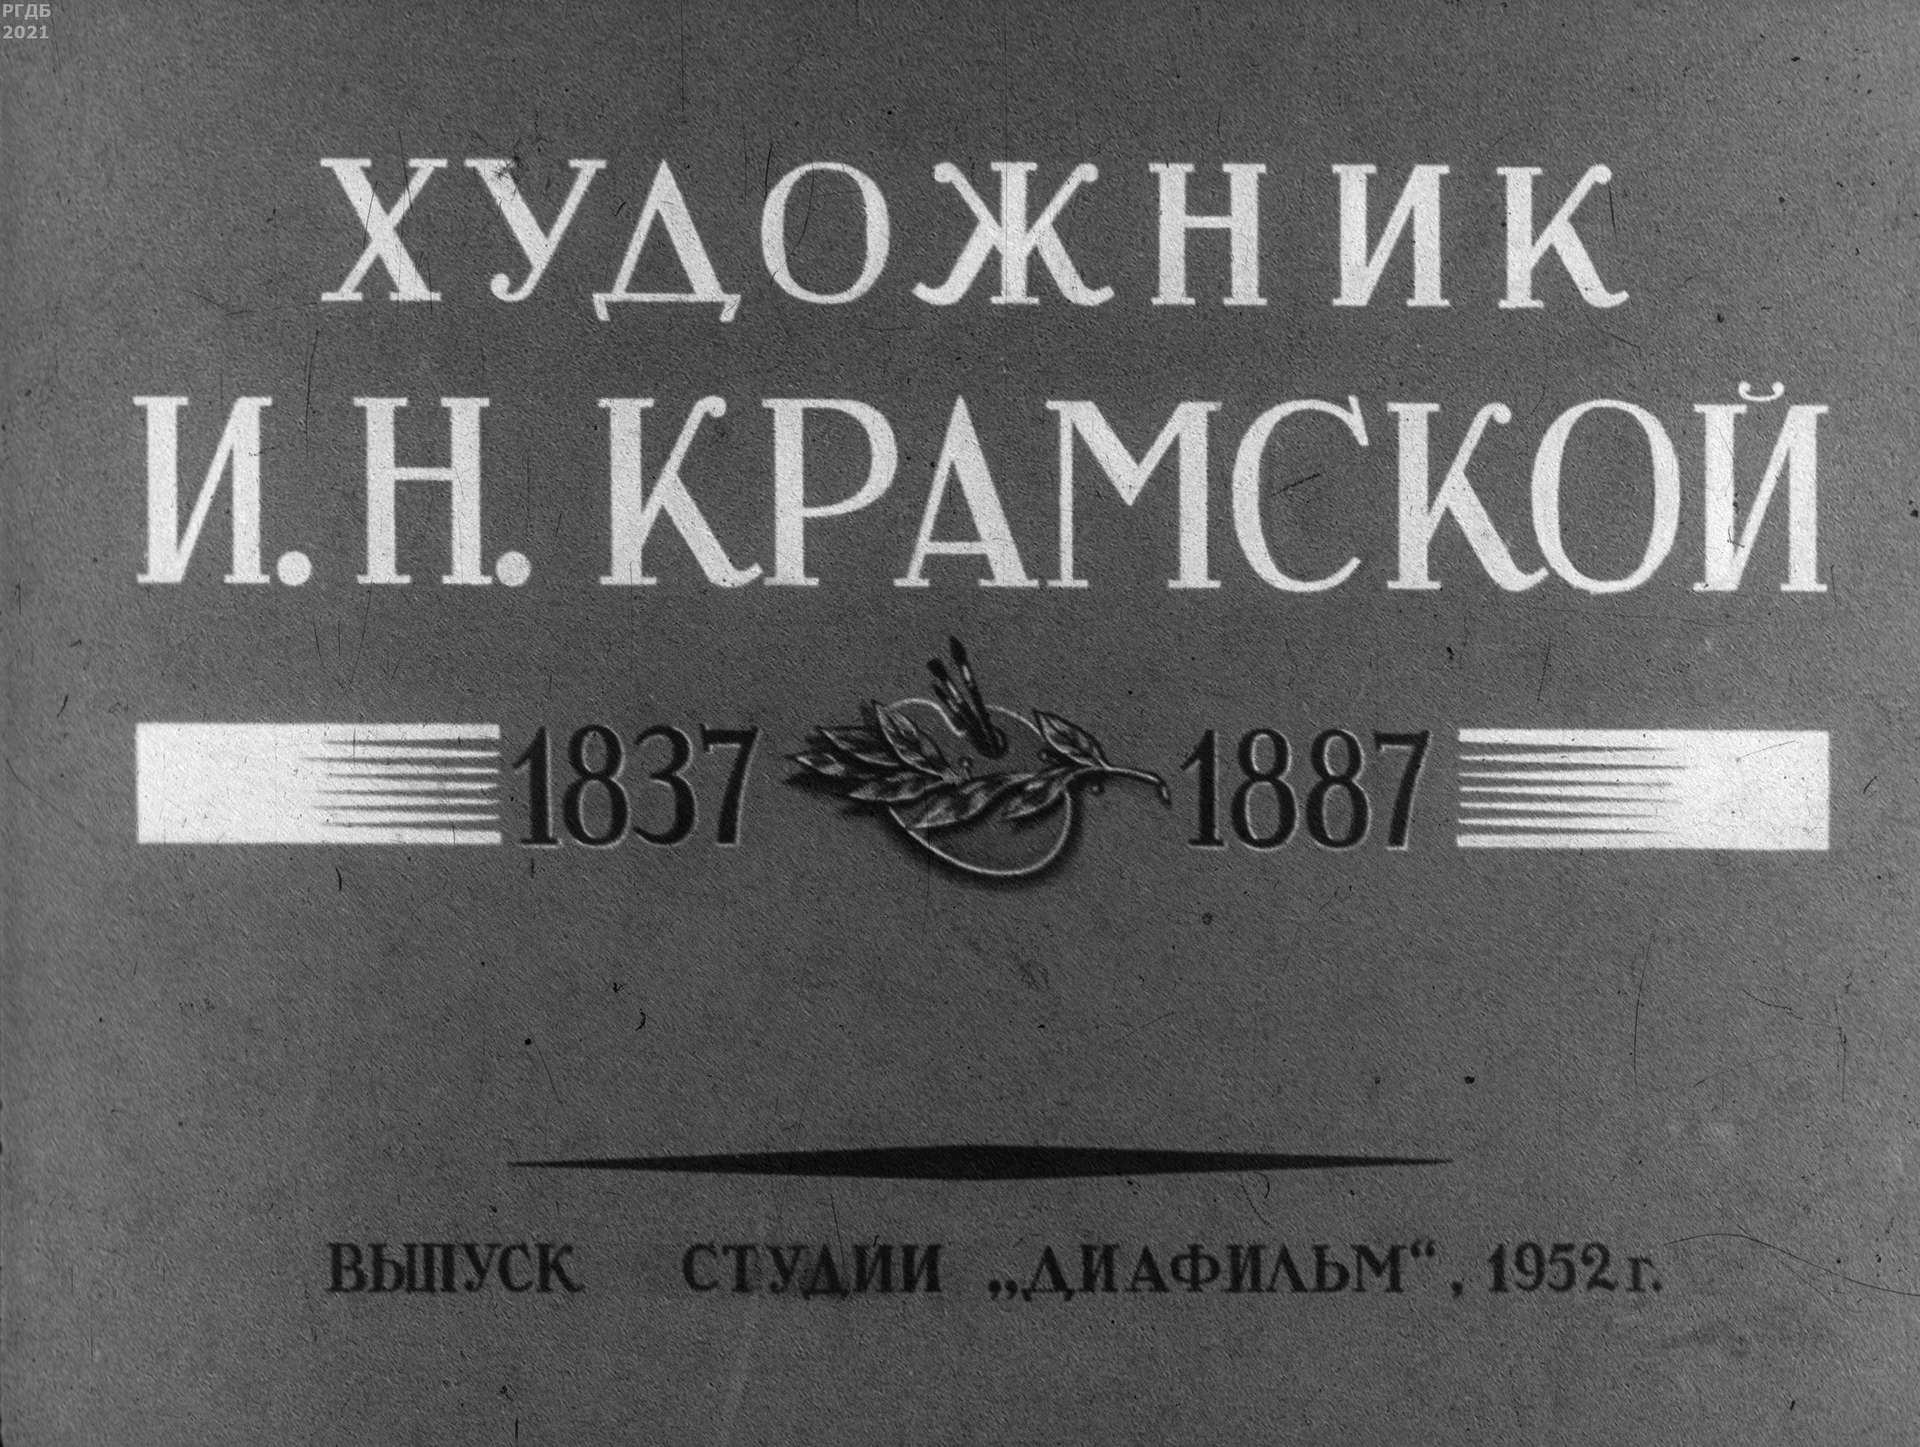 Художник И. Н. Крамской. 1837-1887